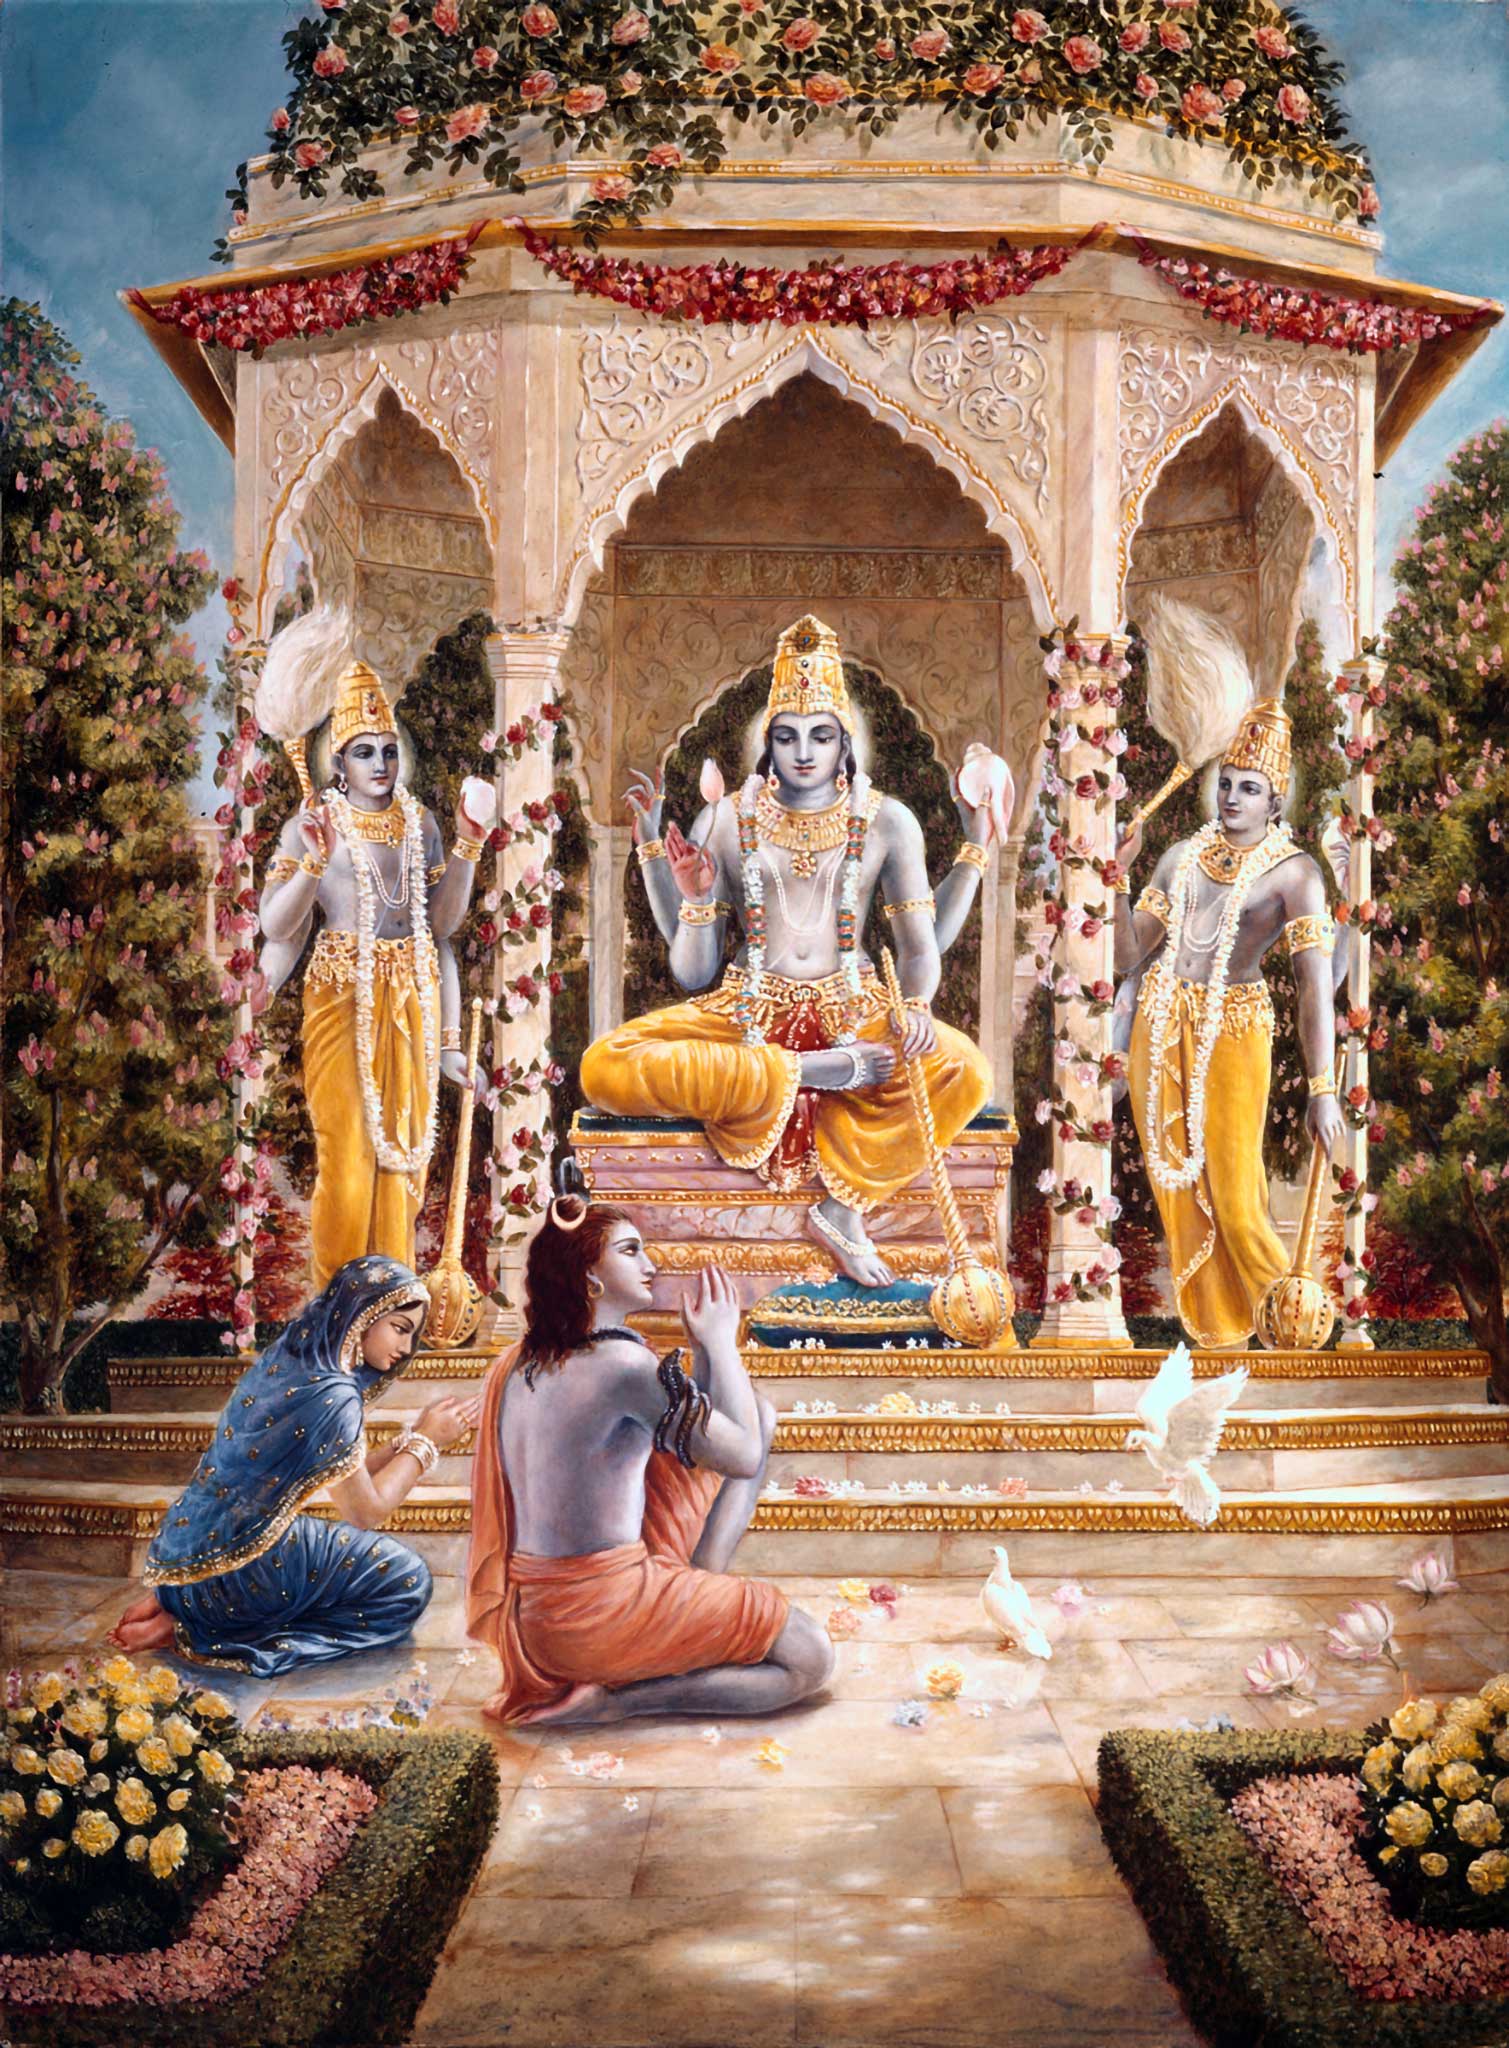 Shiva and Sri Hari manifest Mohini